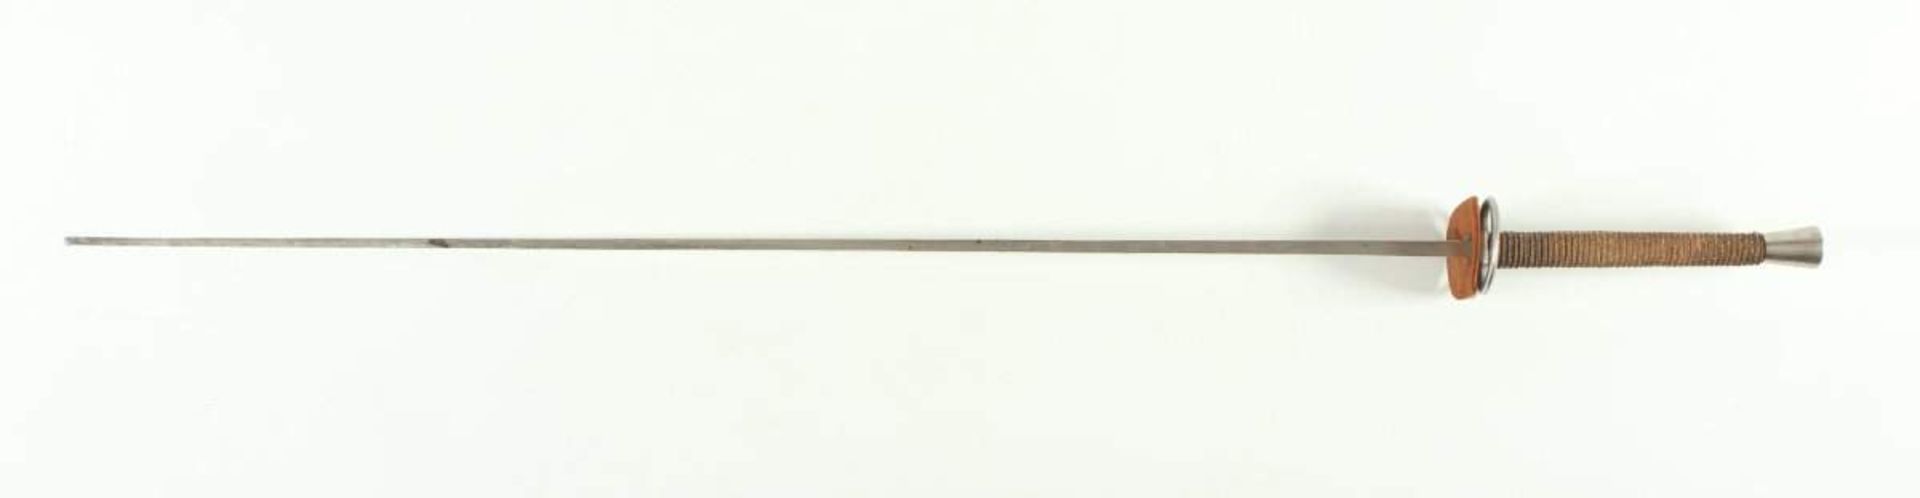 FLORETT, vernickelte Klinge (Hersteller Clemen und Jung, Solingen), L 103 - Image 2 of 3